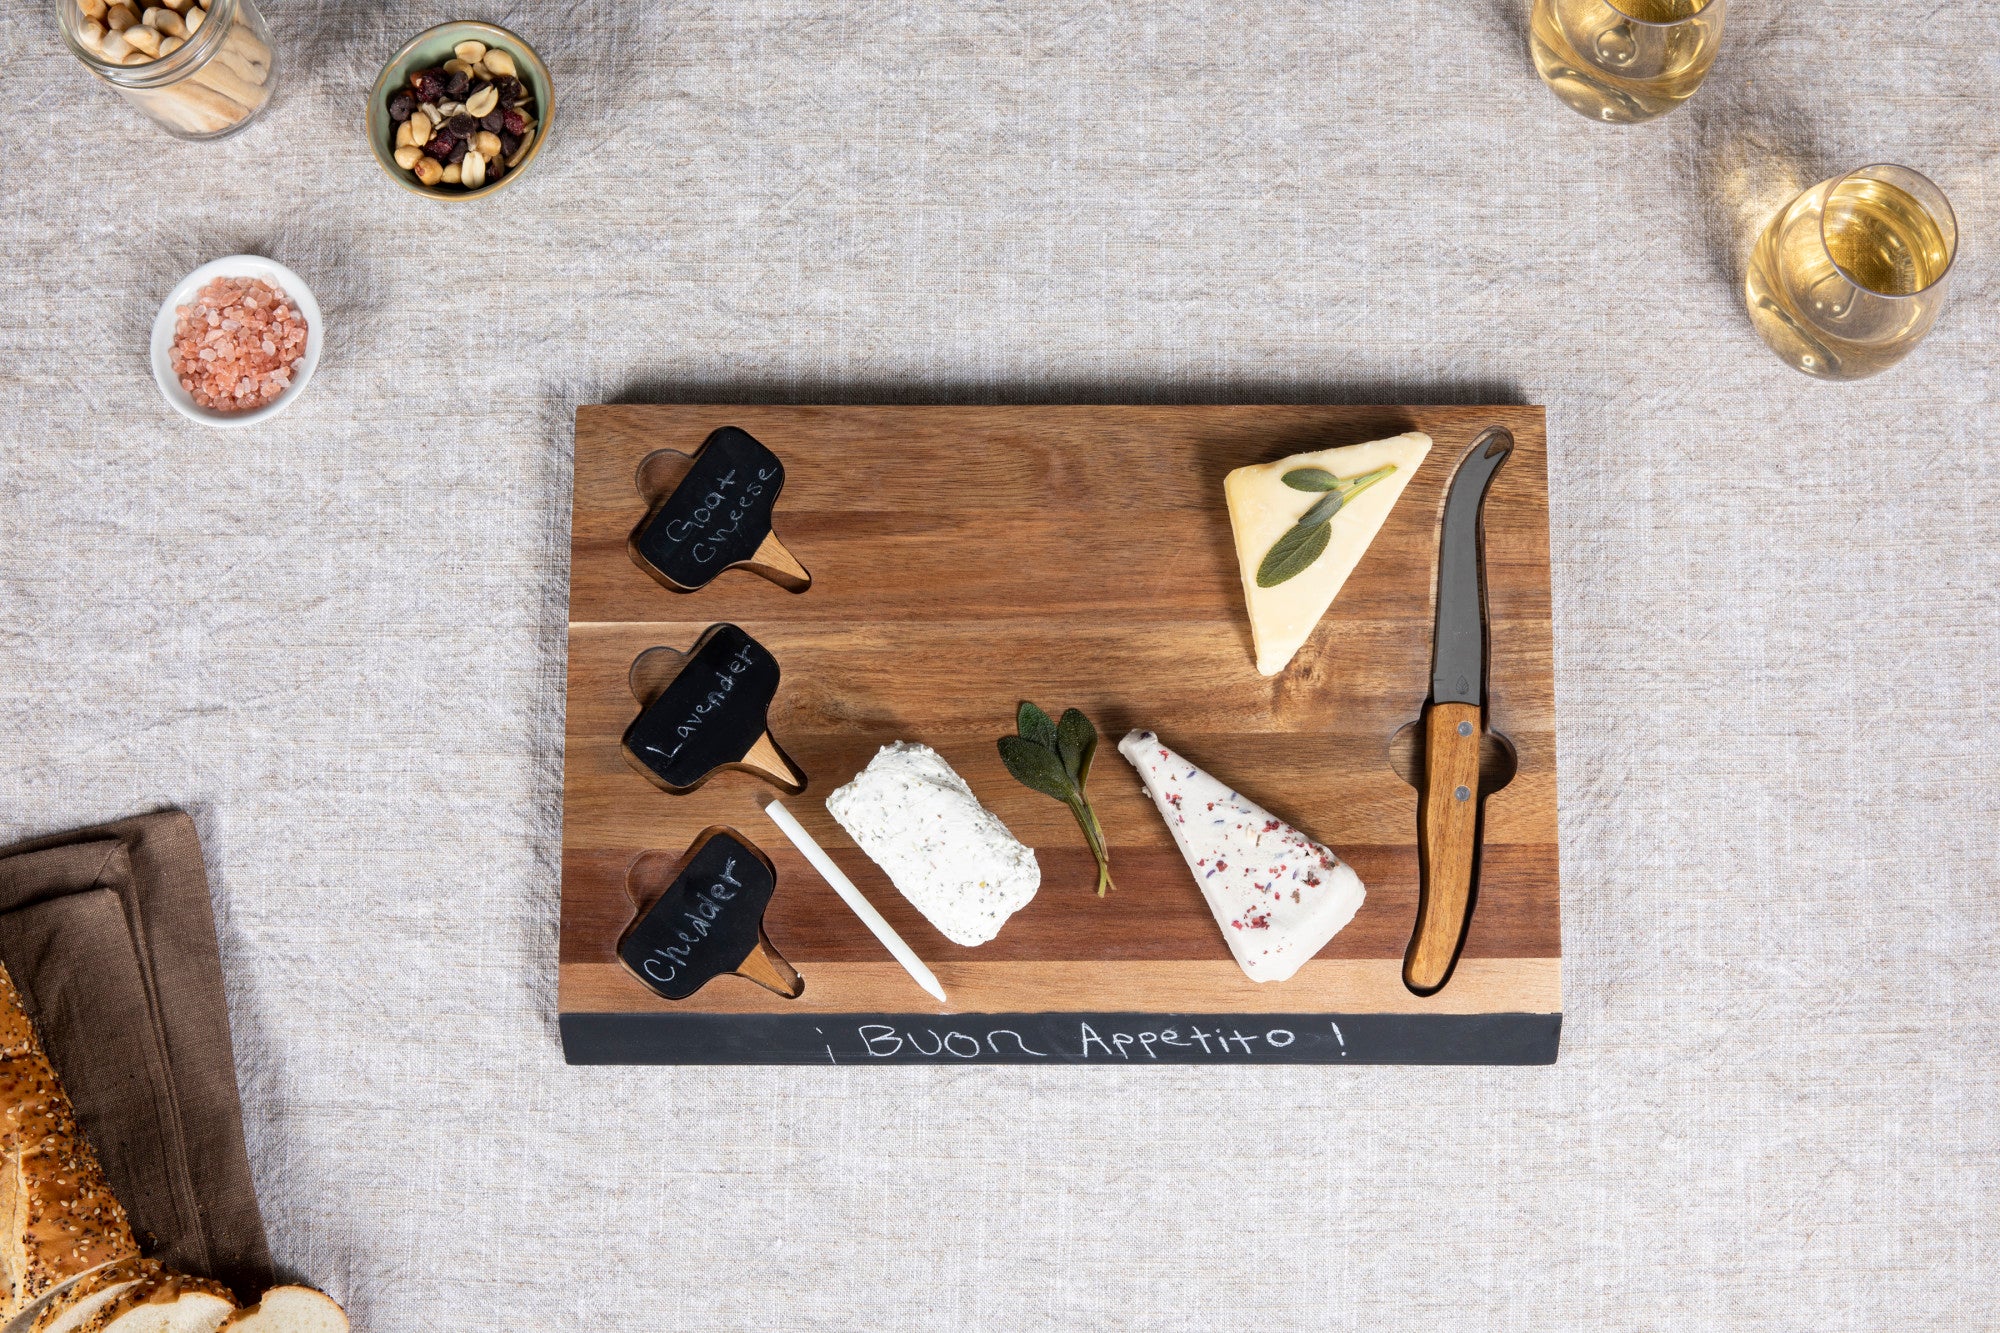 Ratatouille - Delio Acacia Cheese Cutting Board & Tools Set